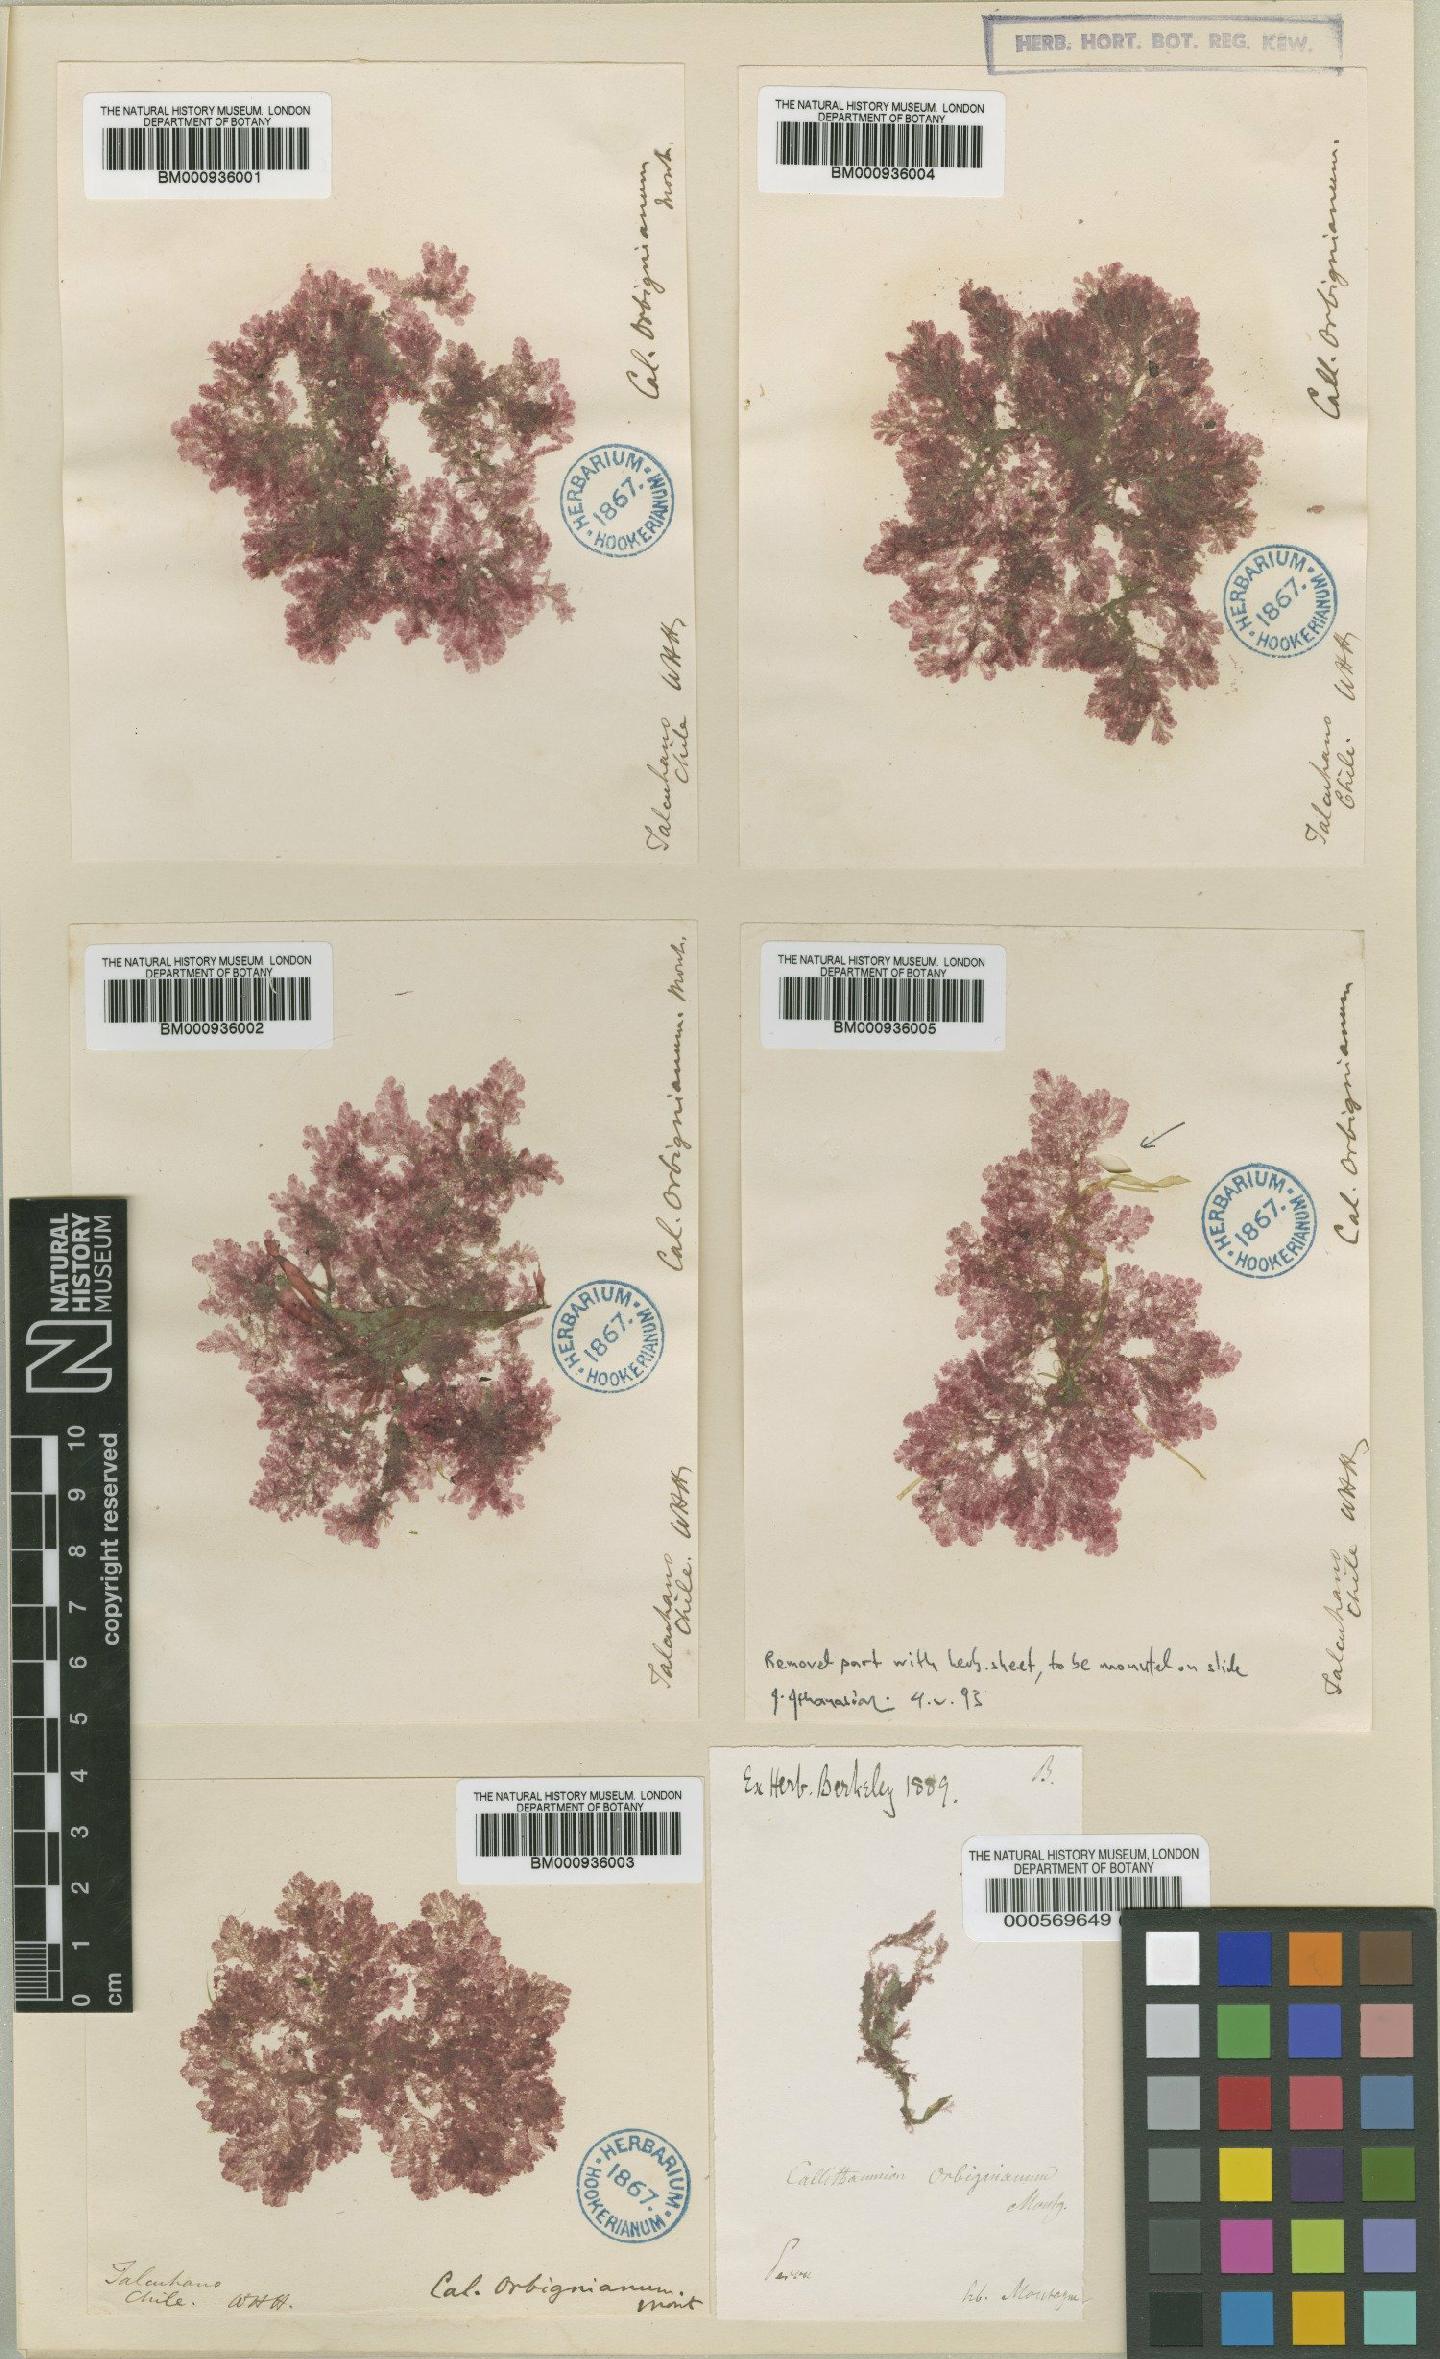 To NHMUK collection (Antithamnion orbignianum (Mont.) De Toni; NHMUK:ecatalogue:428579)